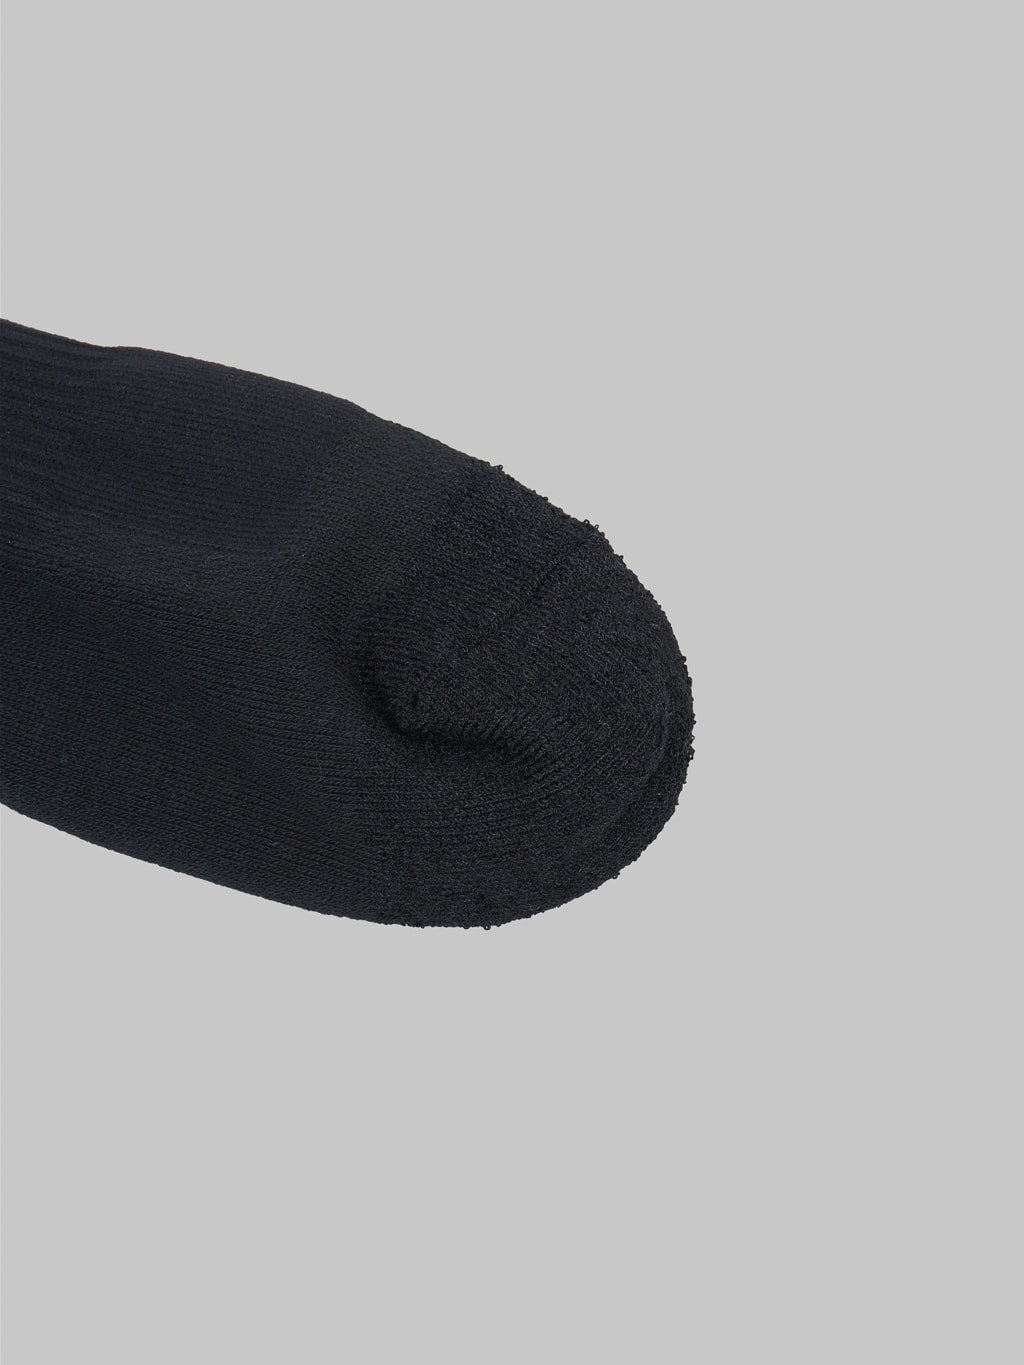 UES boot socks black toe